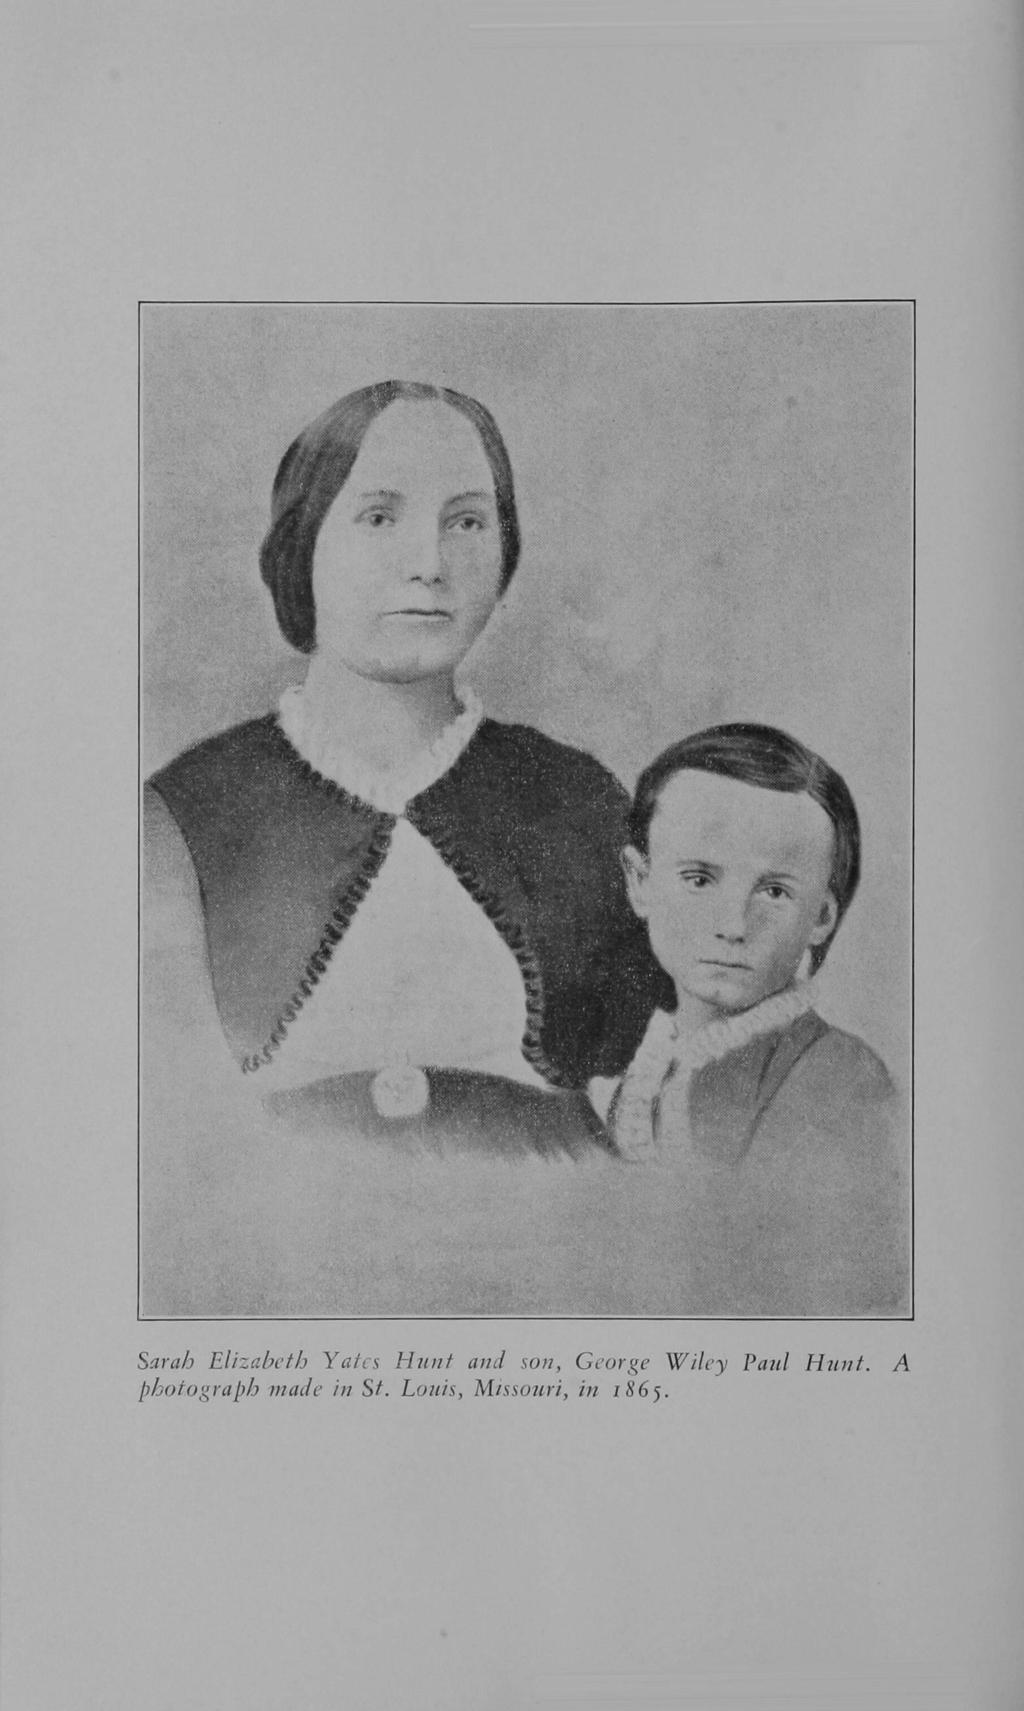 Sarah Elizabeth Yaks Hunt and son, George Wiley Paul